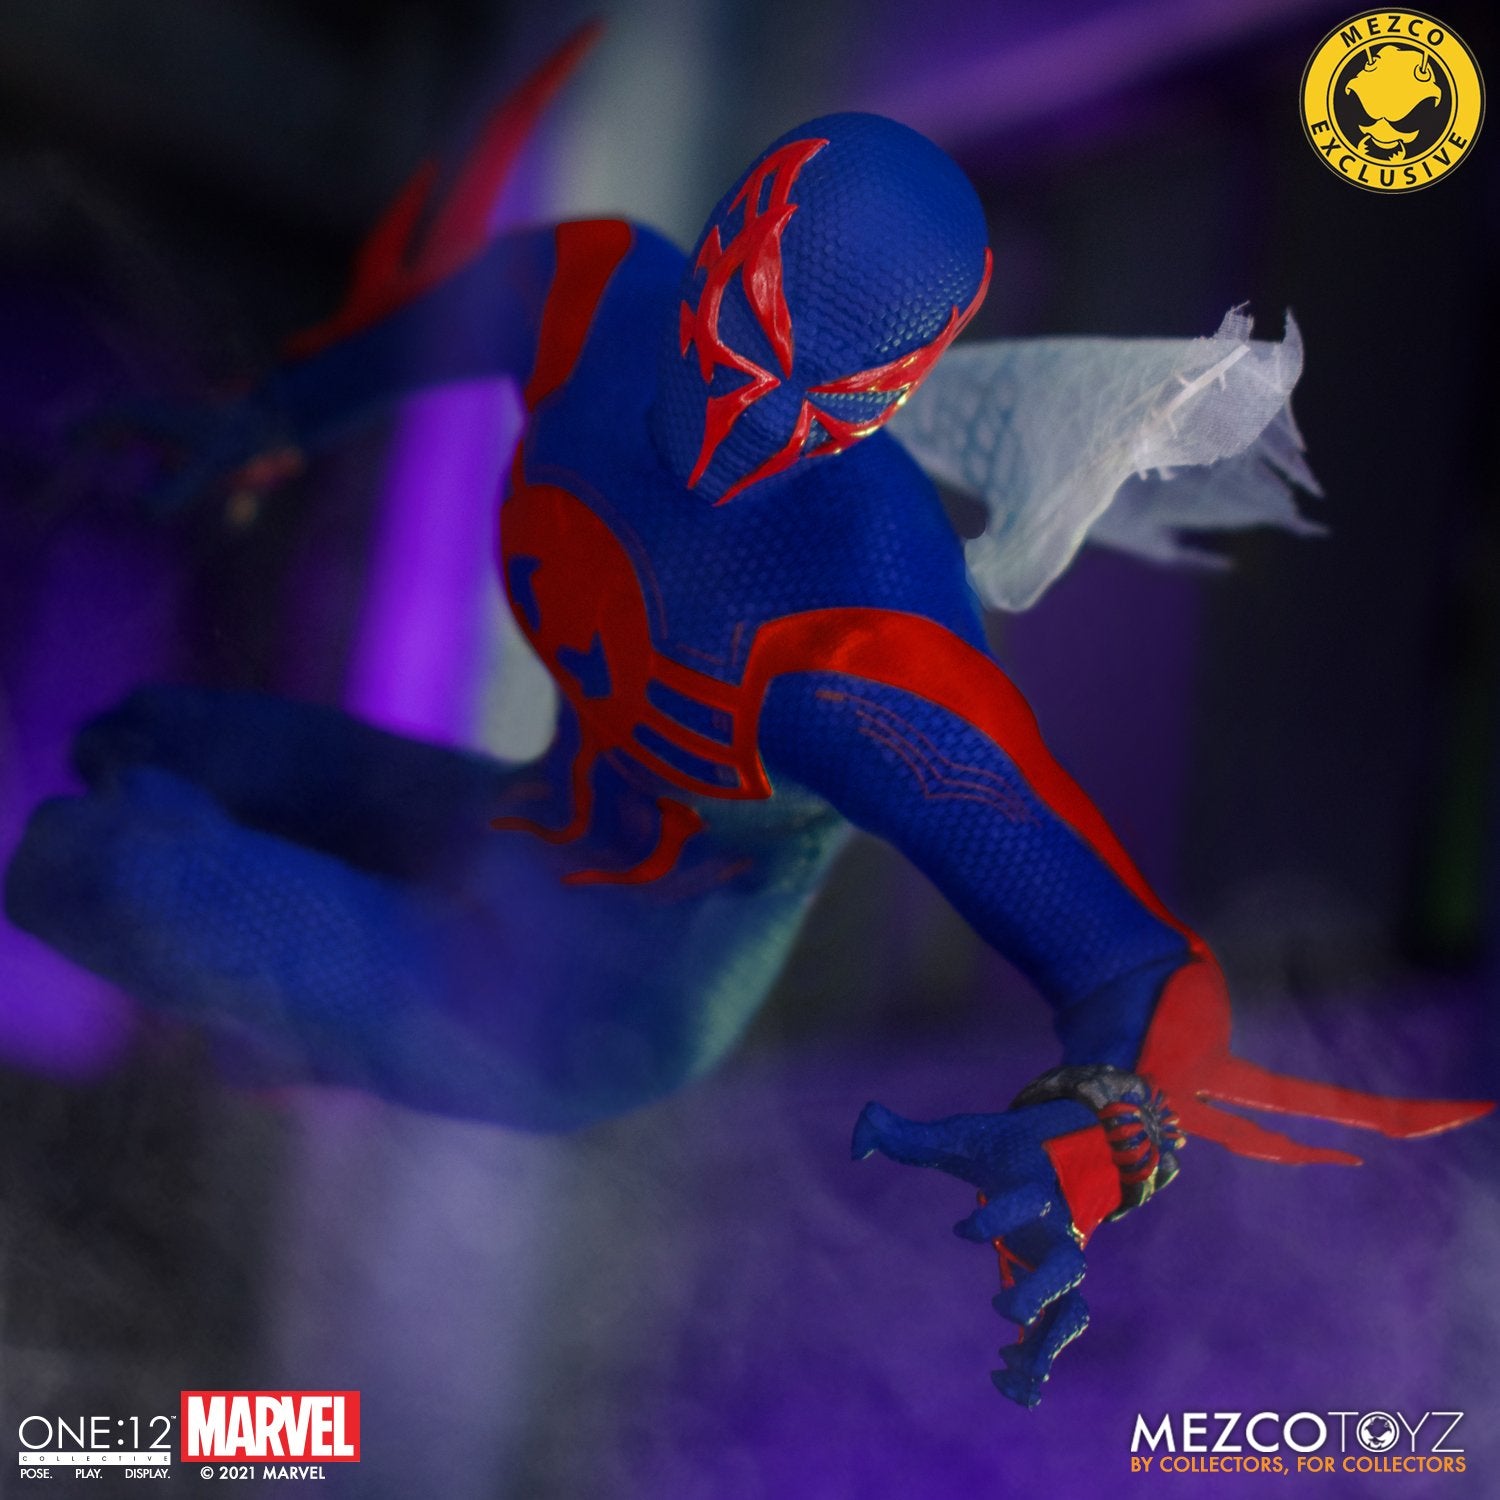 Mezco Toyz One:12 Collective Spider-Man 2099 Figure